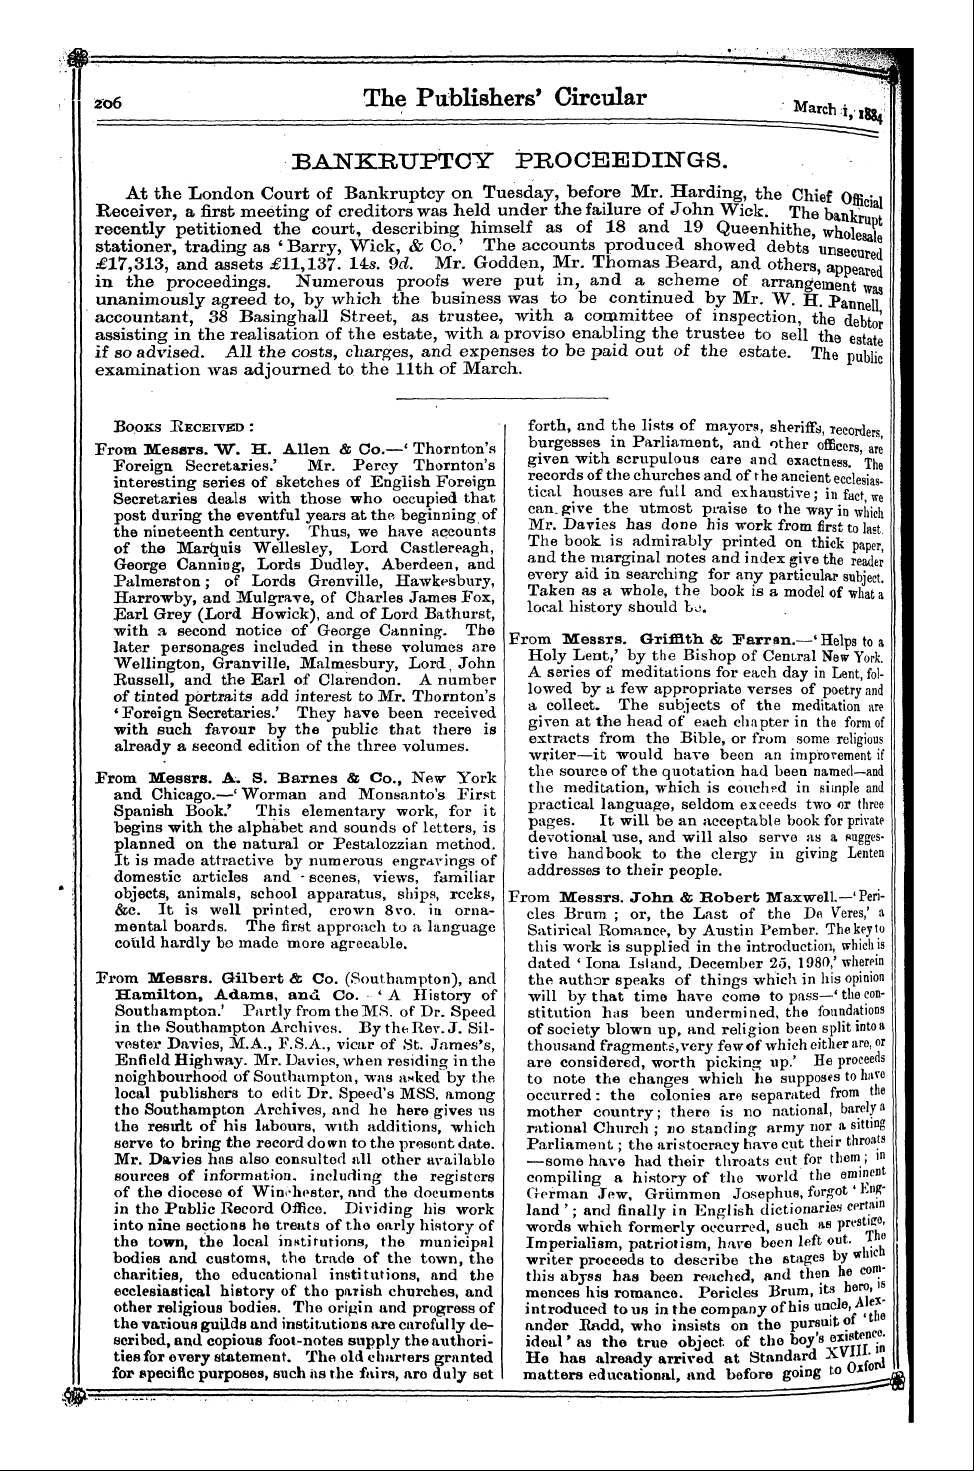 Publishers’ Circular (1880-1890): jS F Y, 1st edition: 10